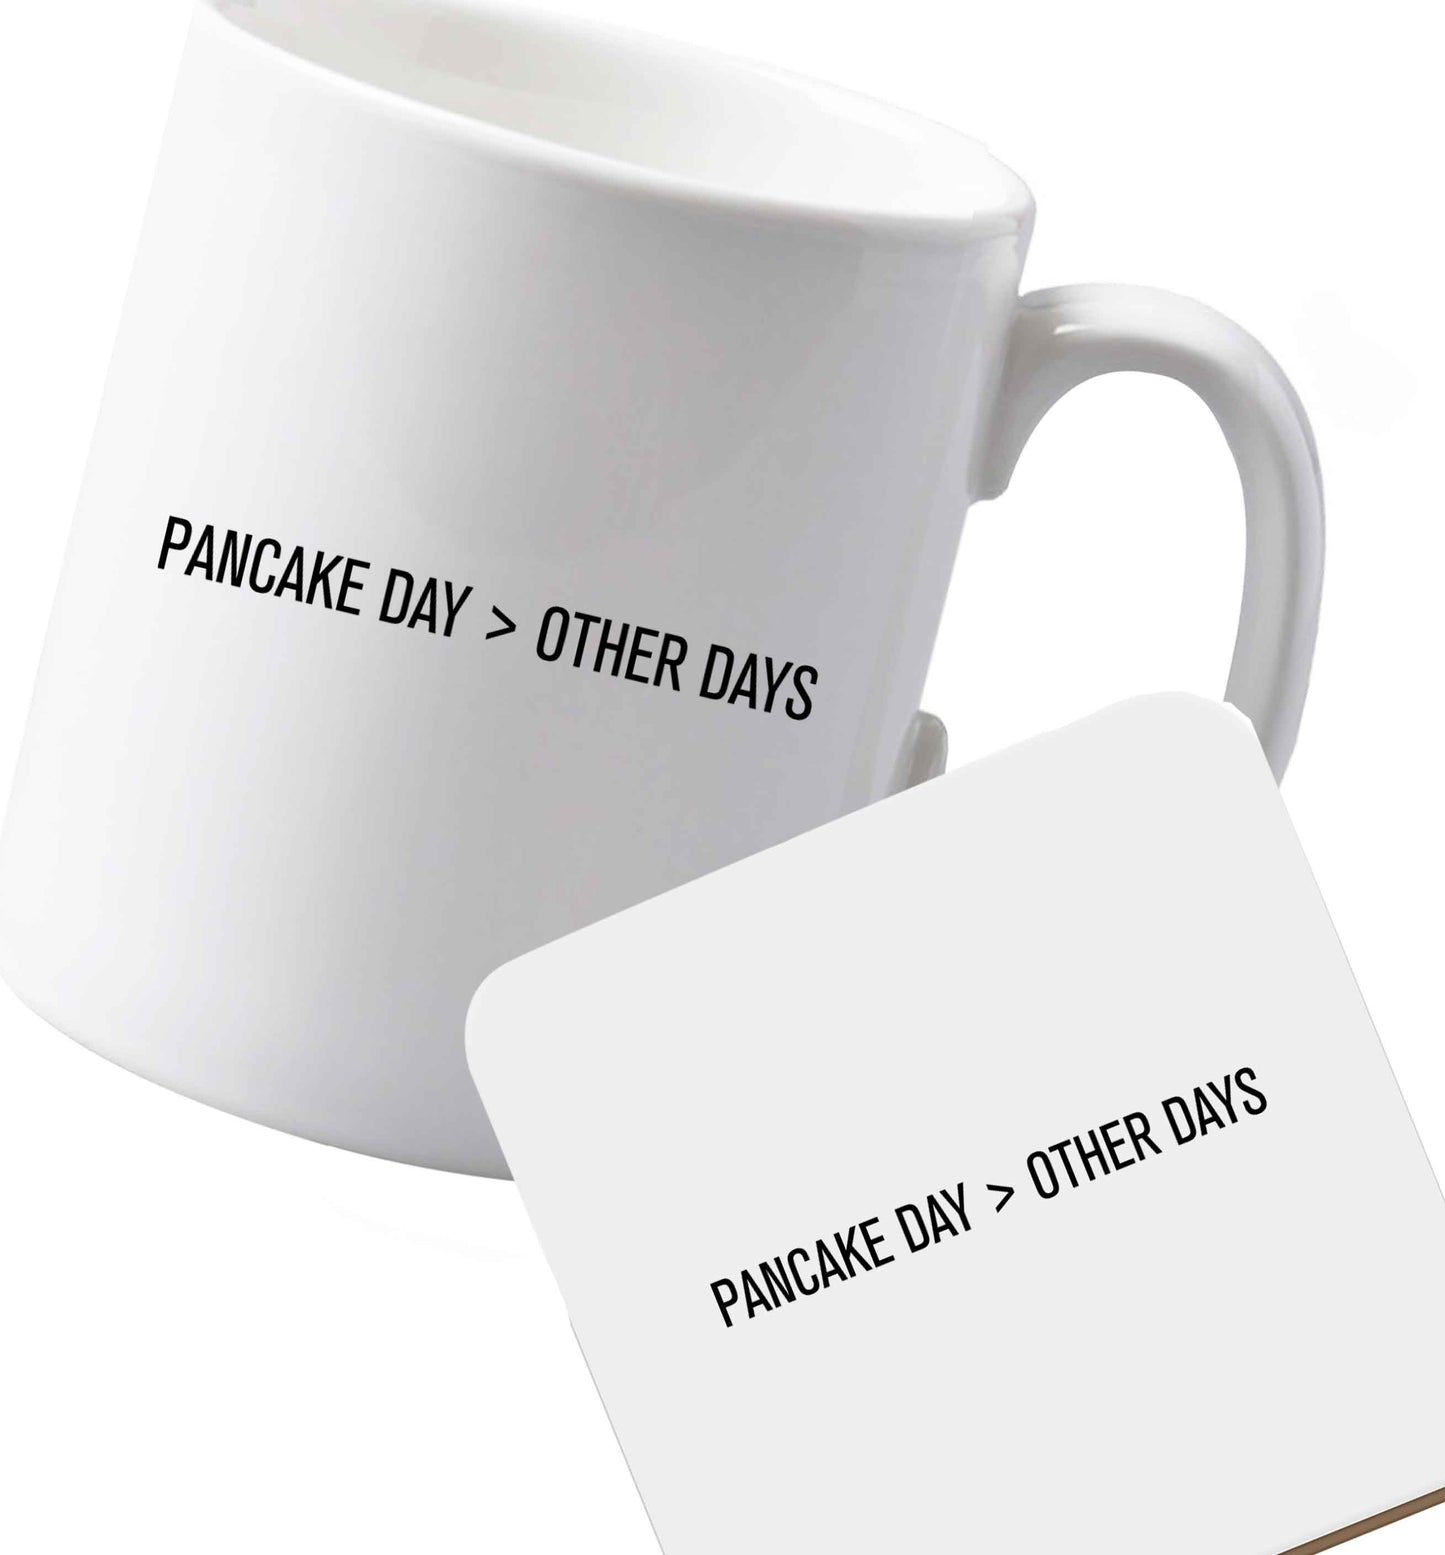 10 oz Ceramic mug and coaster Pancake Day > Other Days both sides